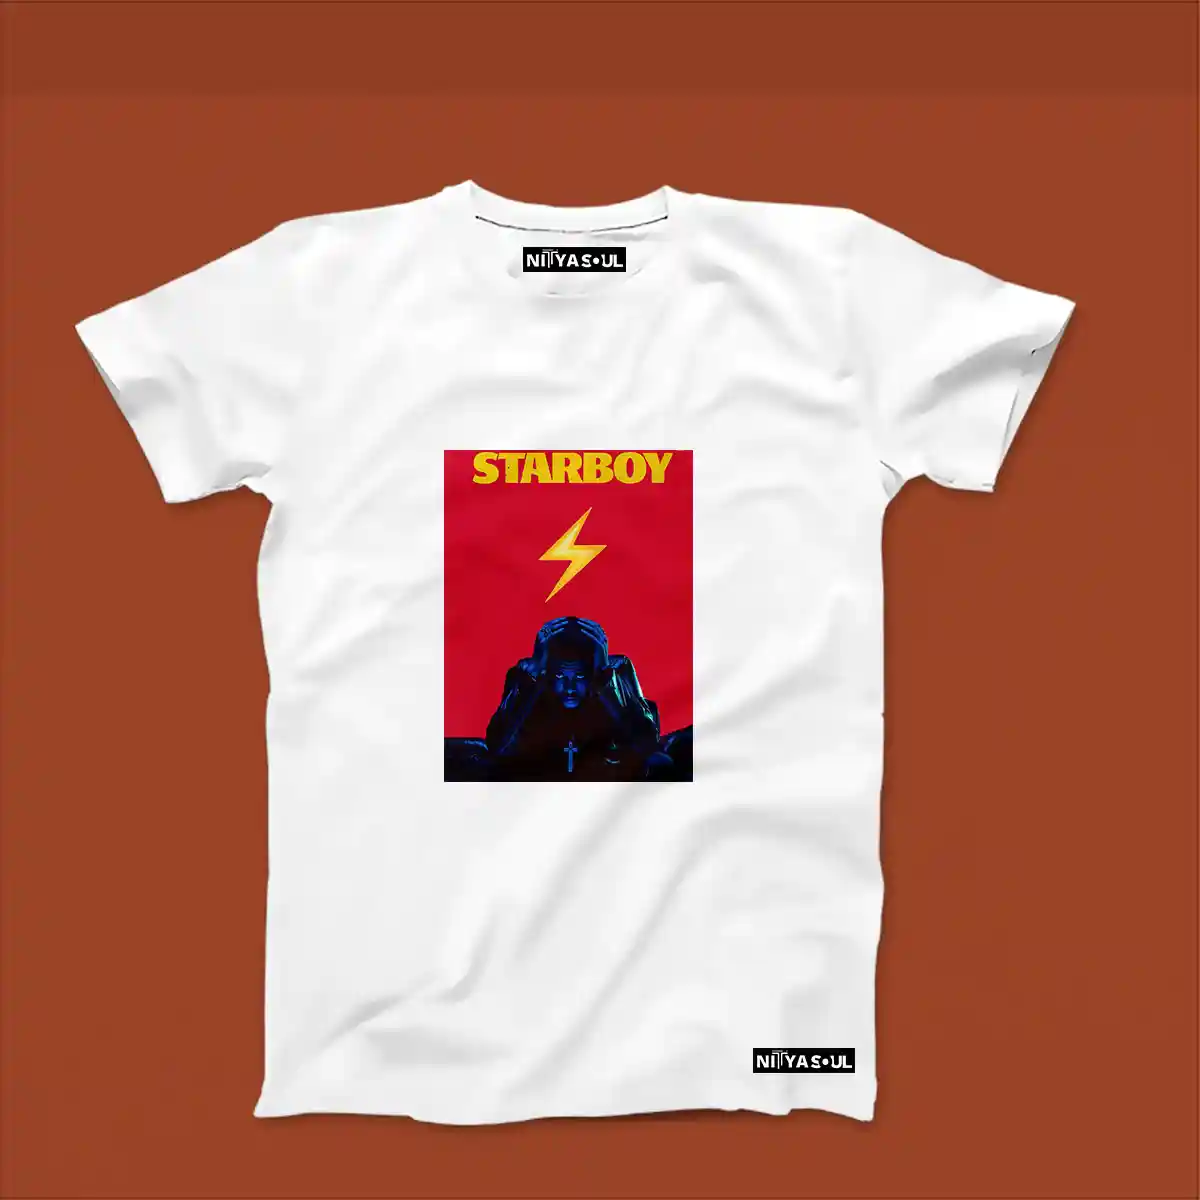 STARTBOY Weeknd T-shirt